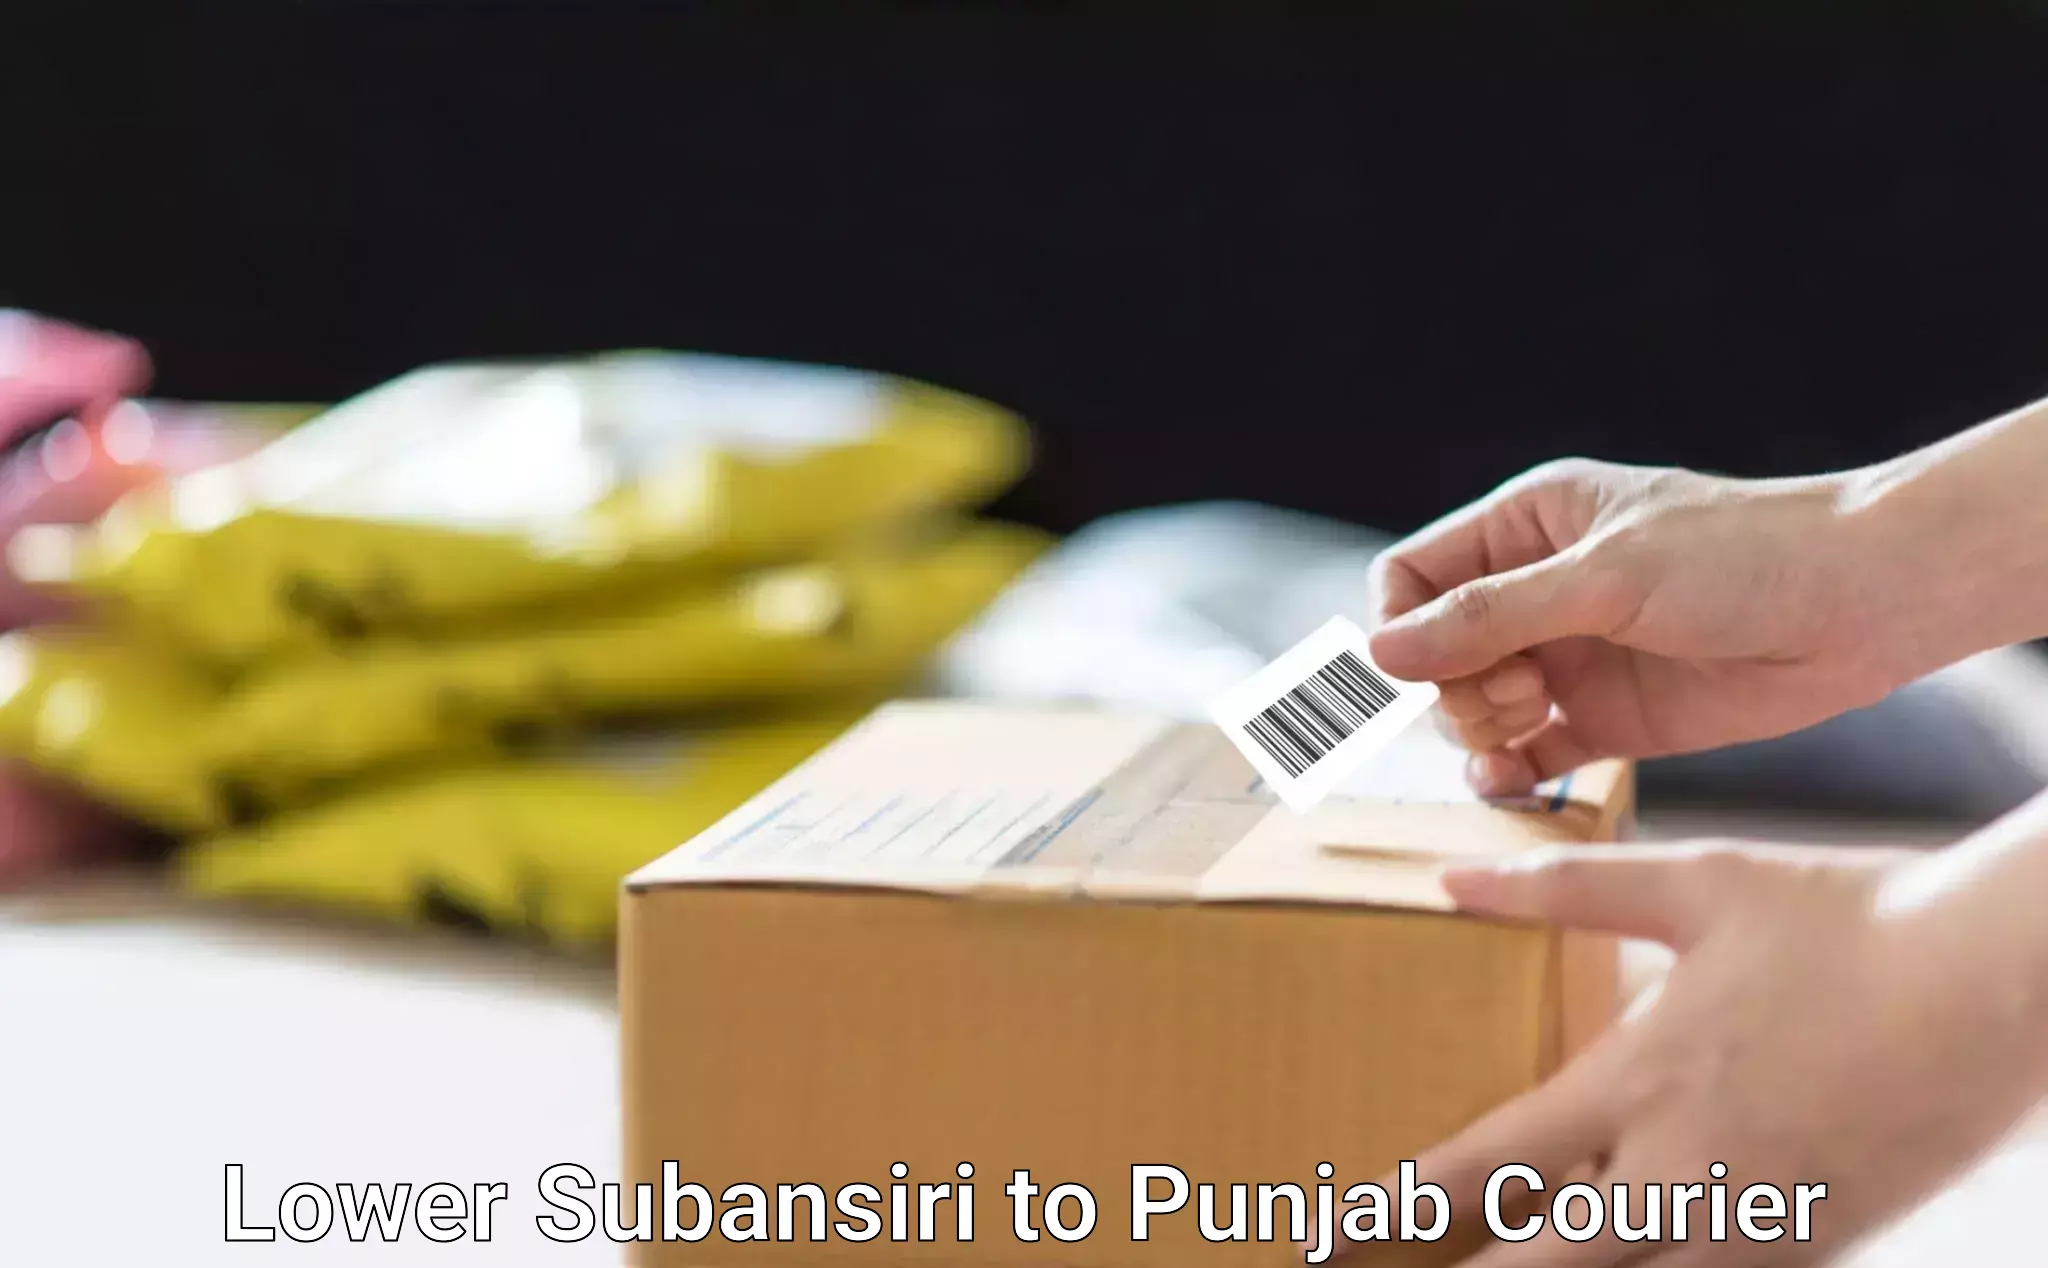 Bulk courier orders Lower Subansiri to Dinanagar